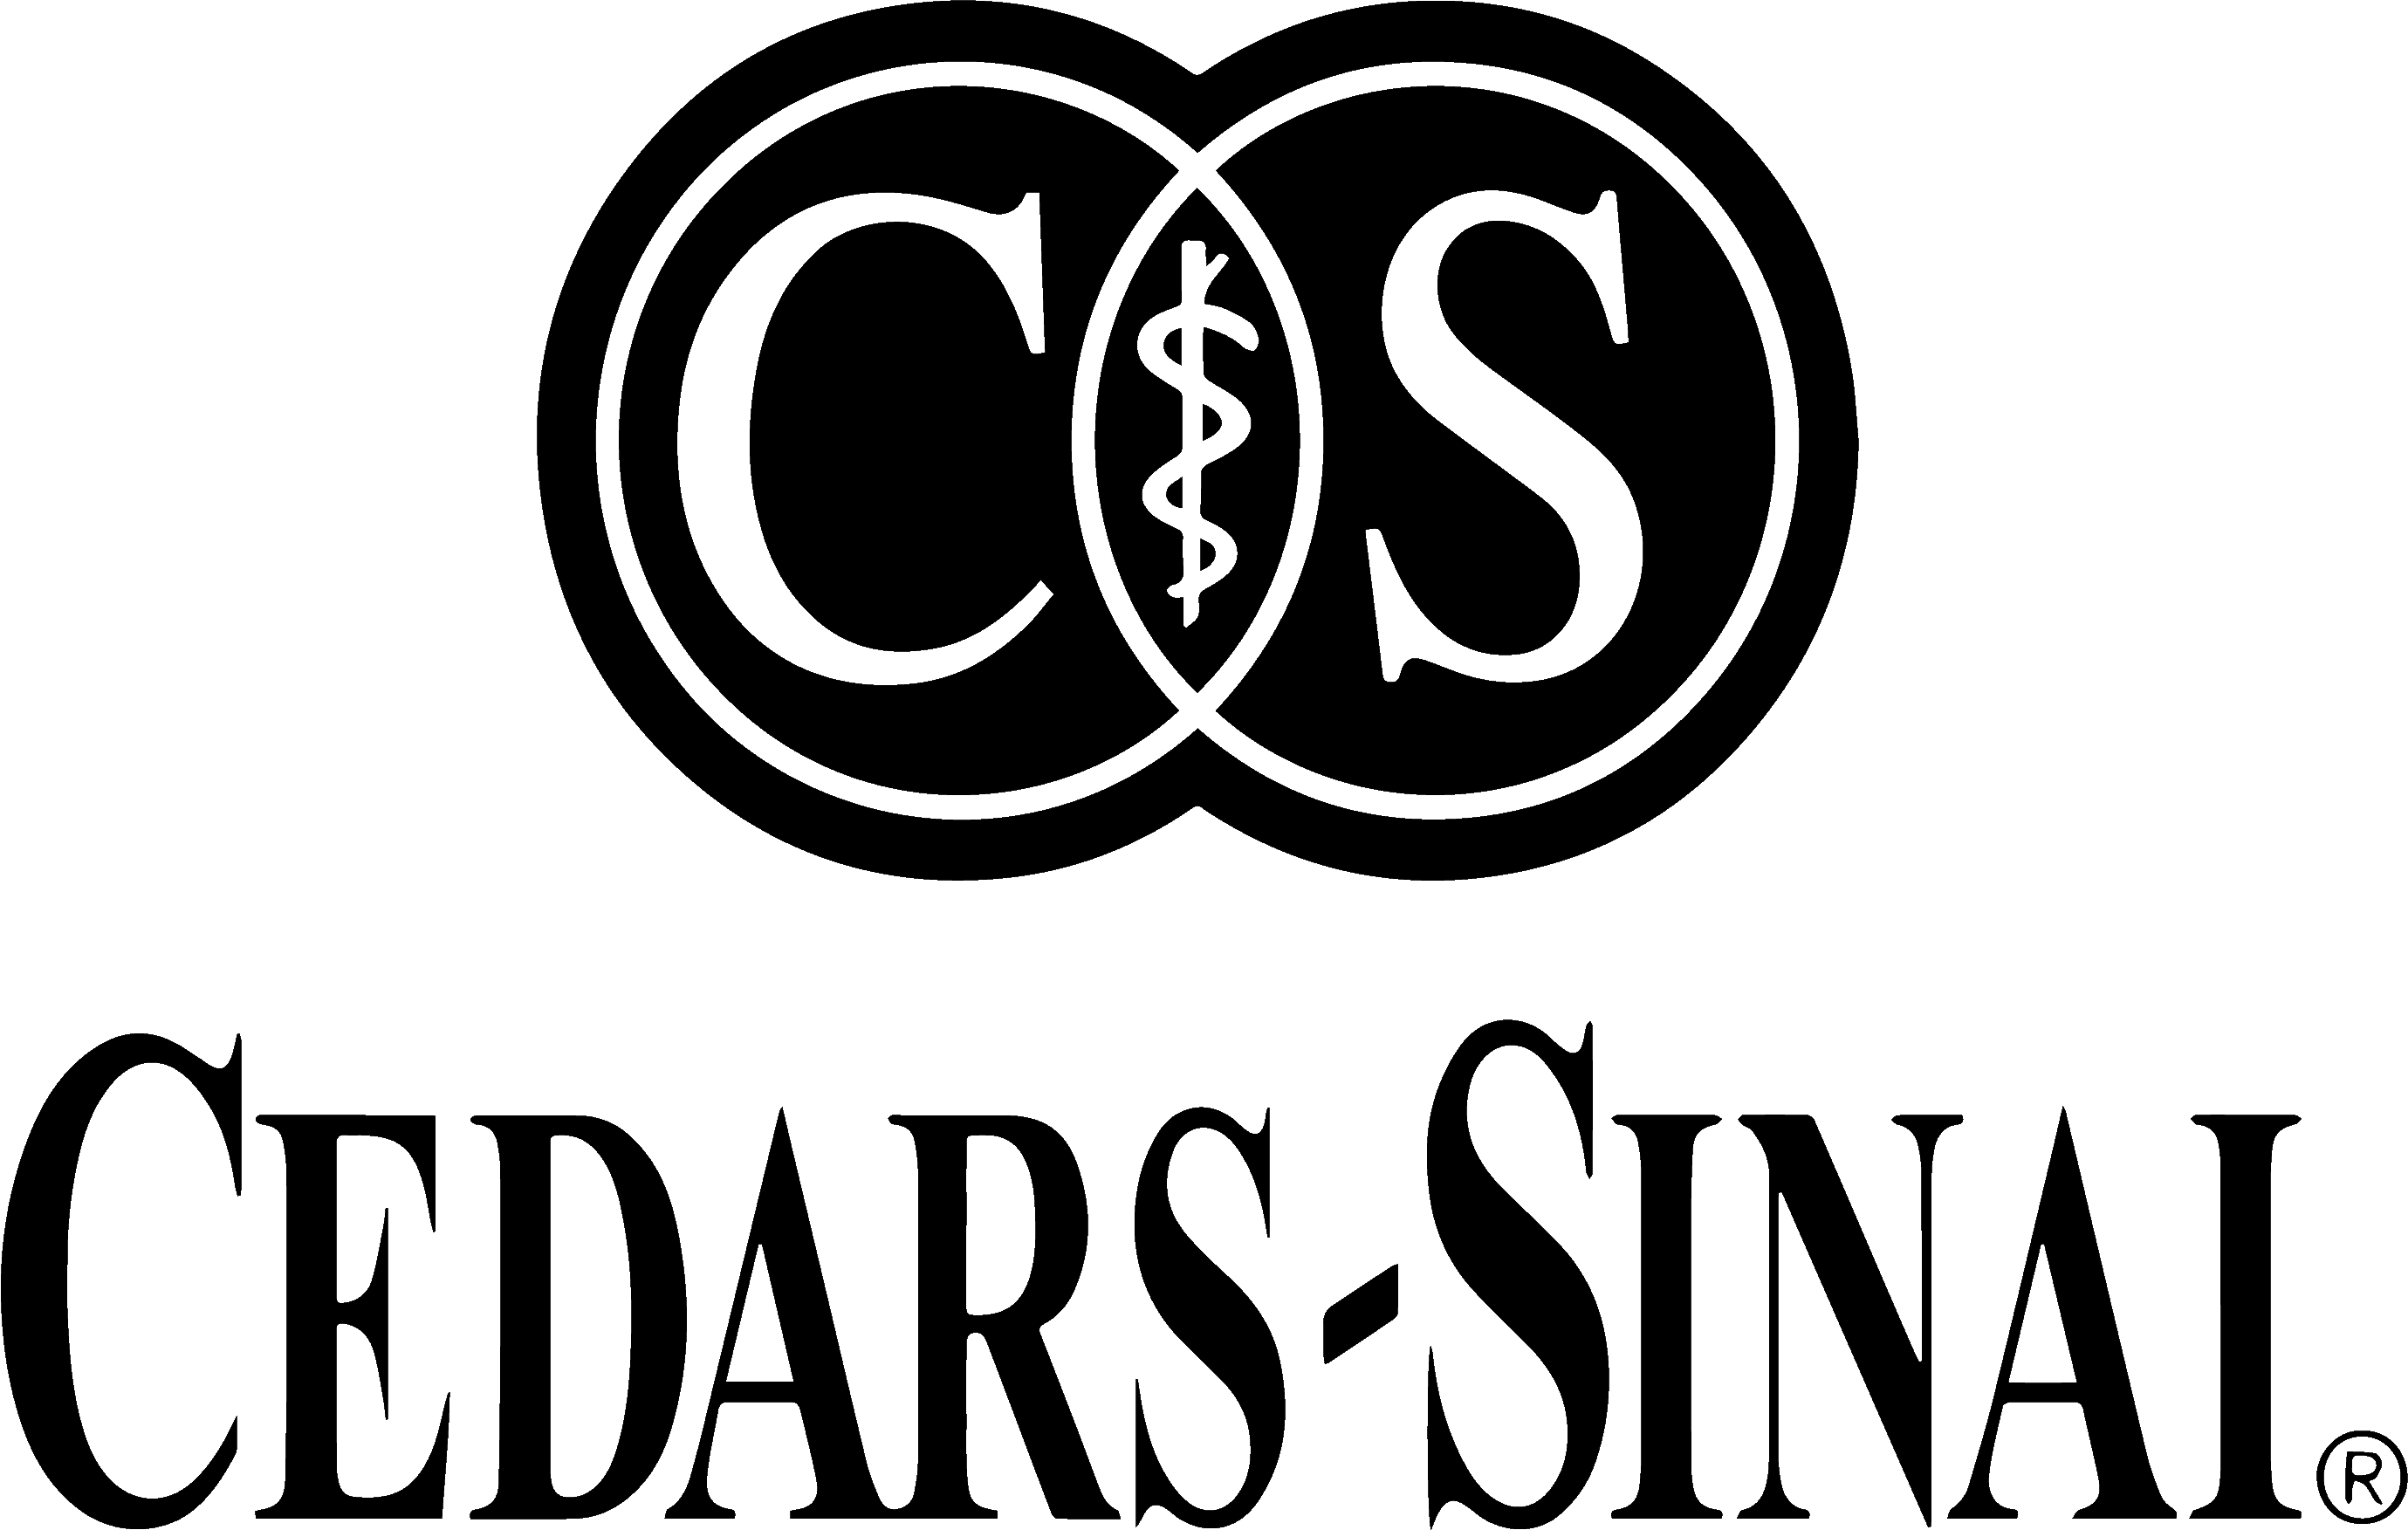 Cedars-Sinai Medical Center logo in black